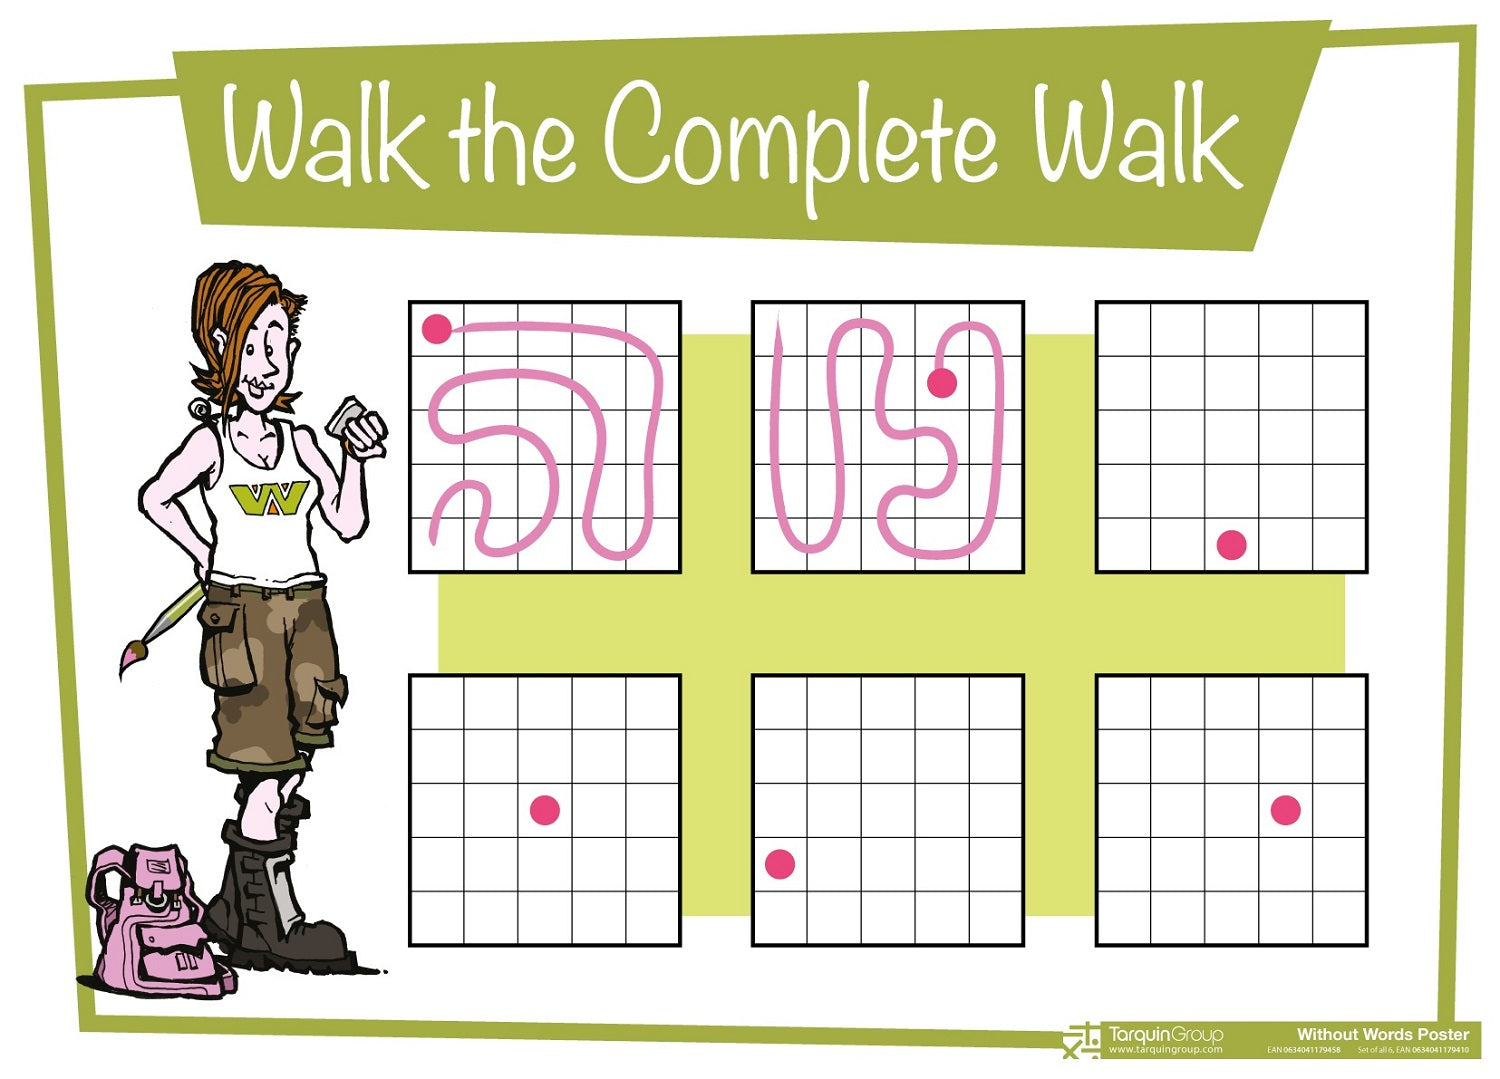 Walk the Complete Walk